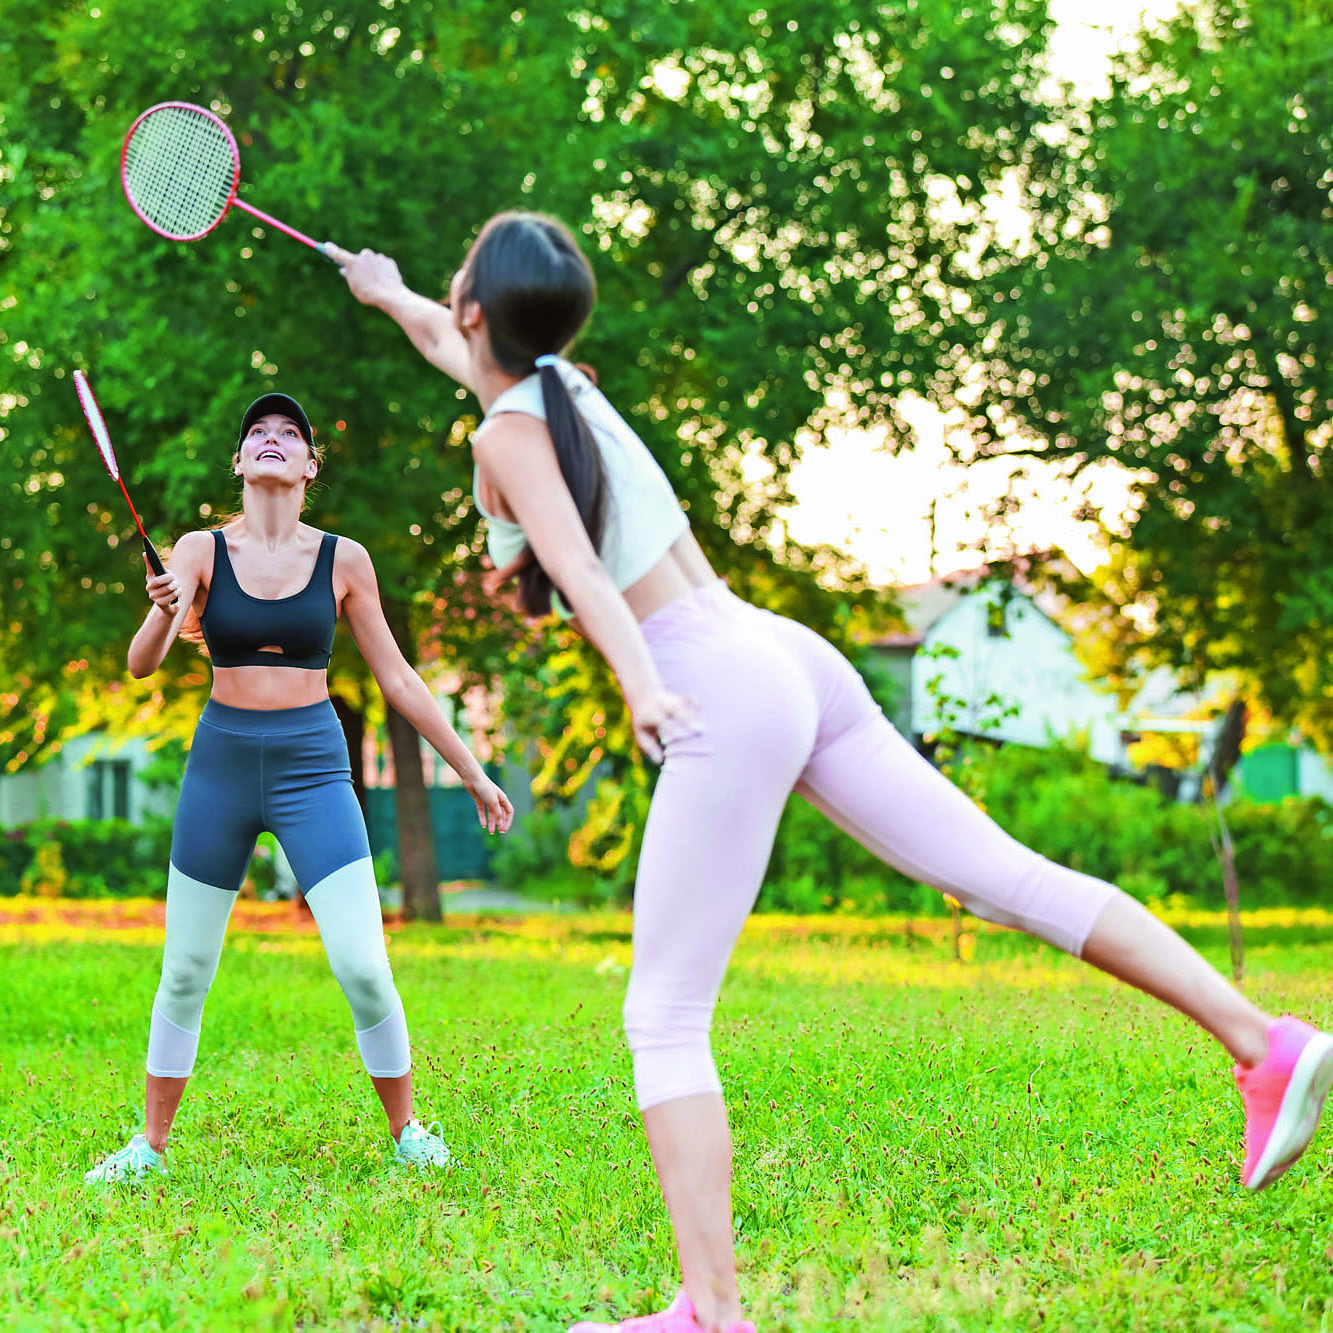 Young women playing badminton outdoors